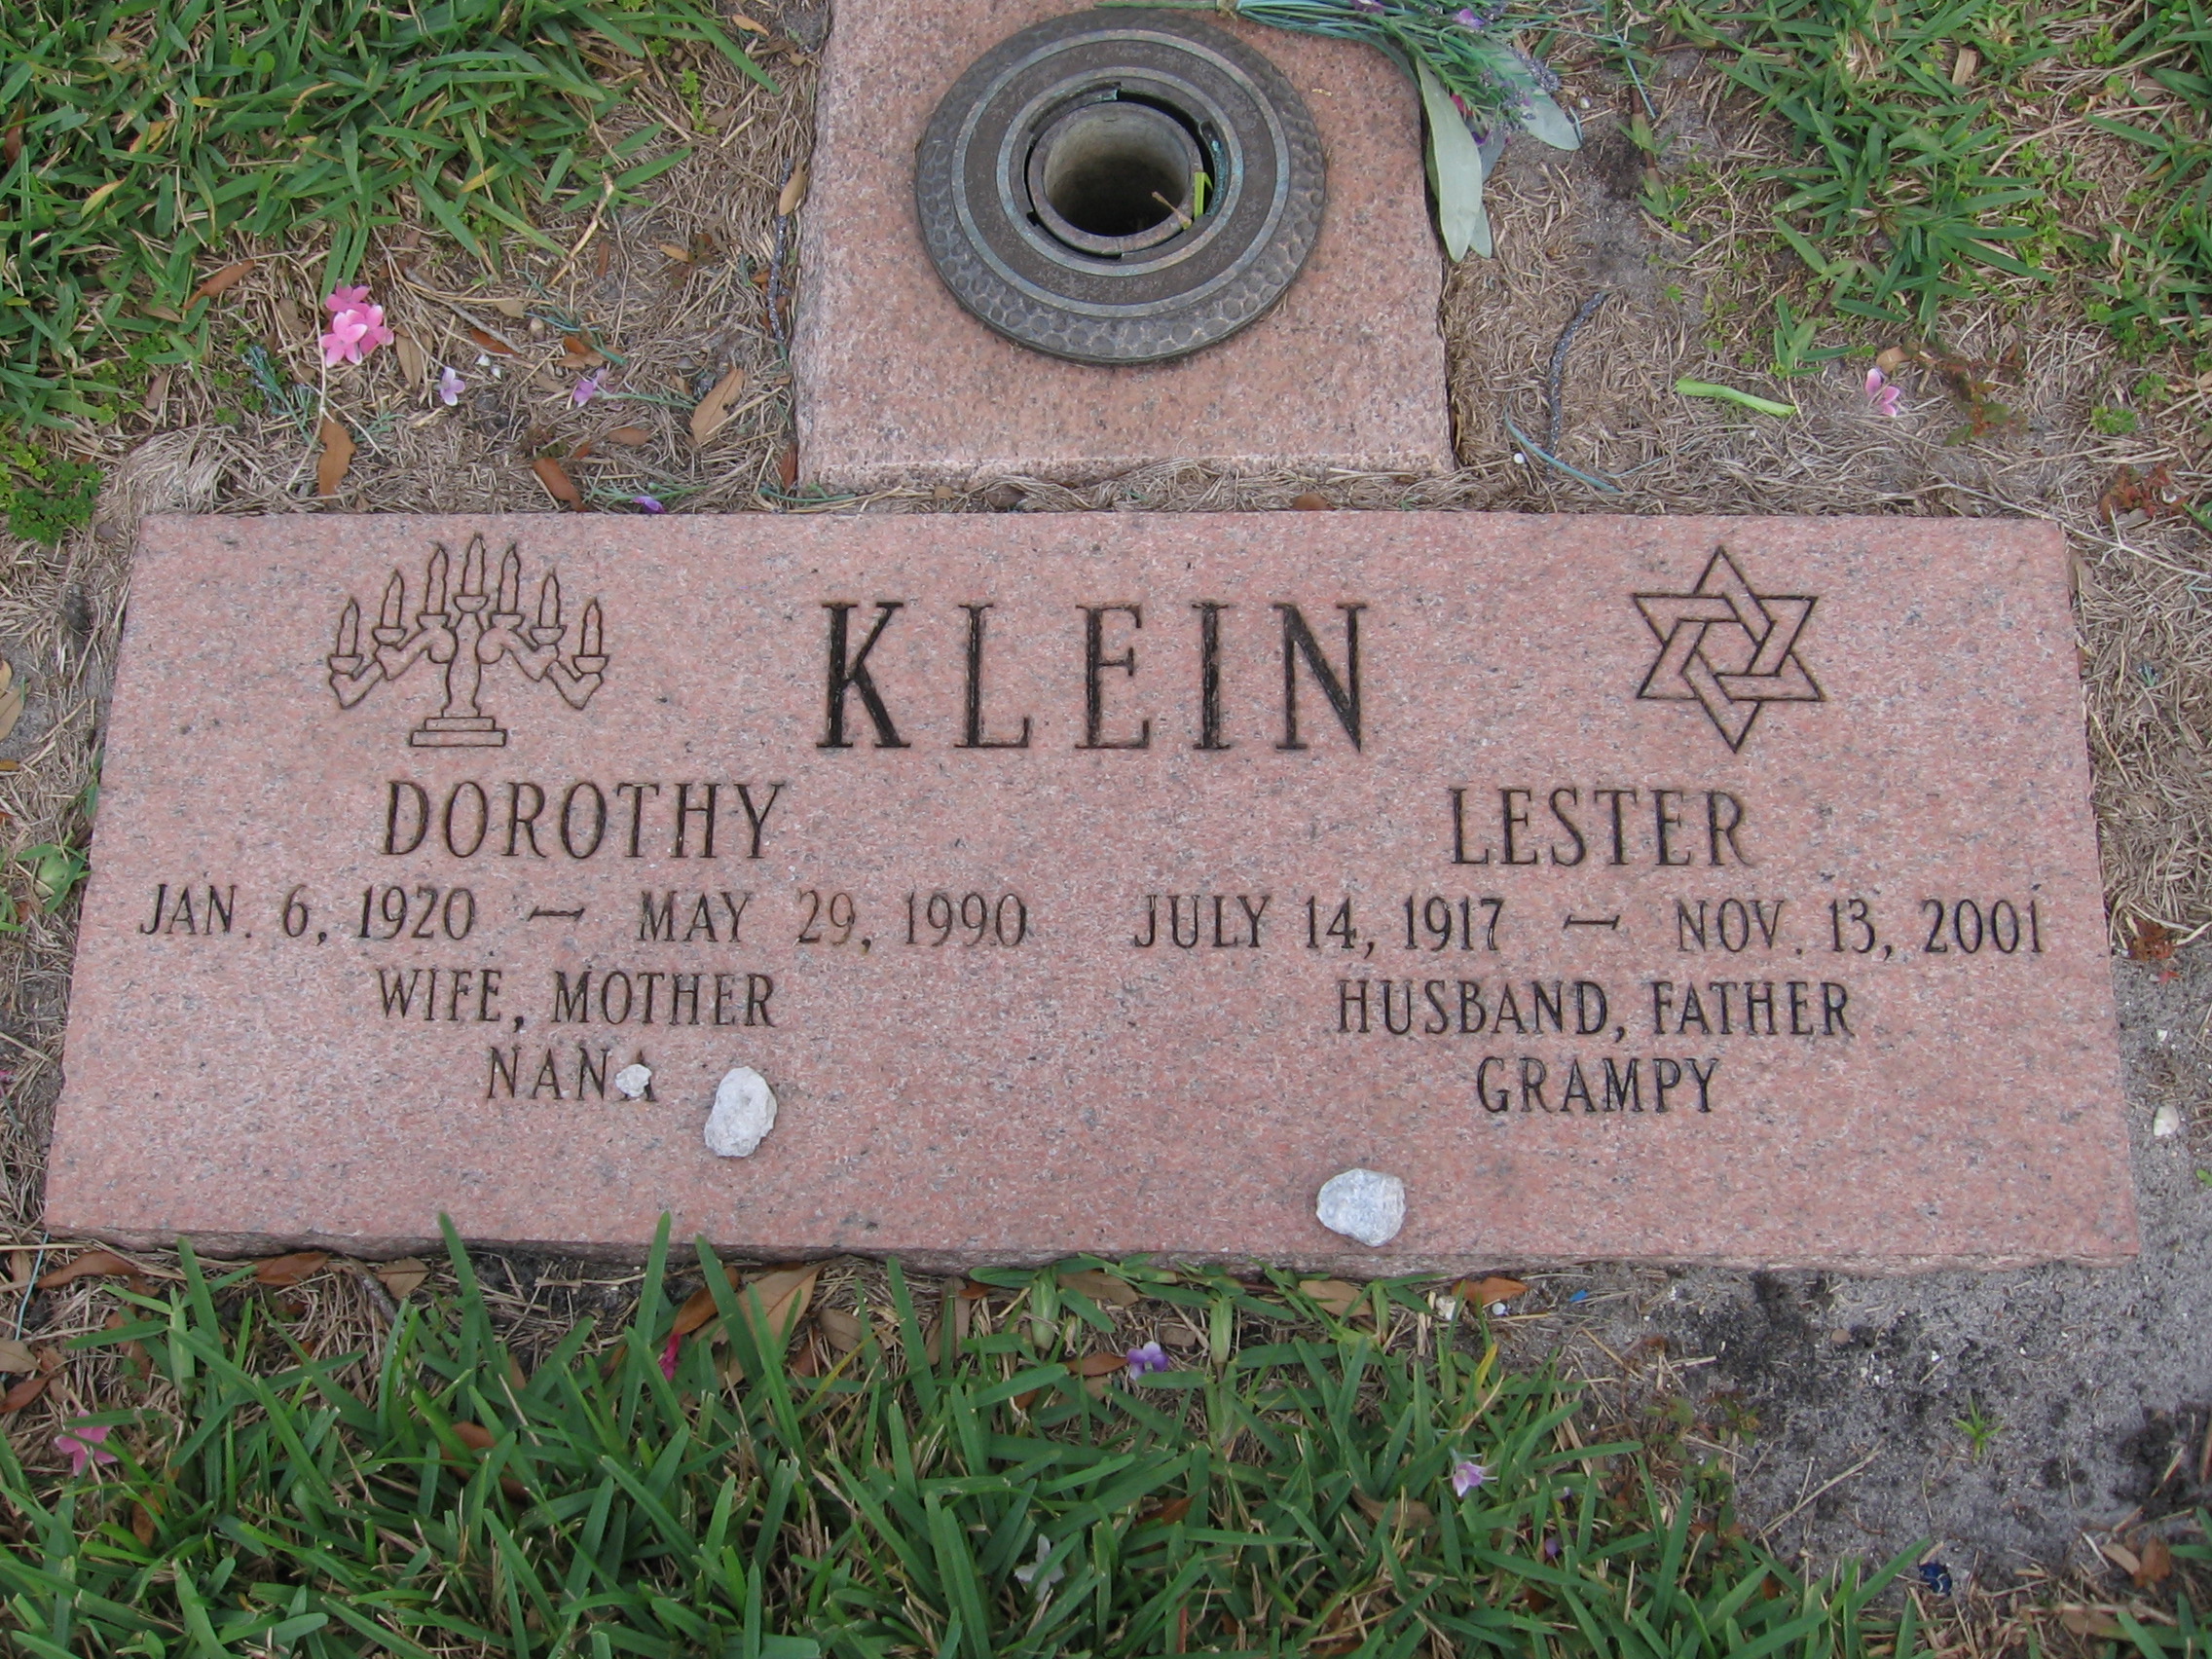 Dorothy Klein